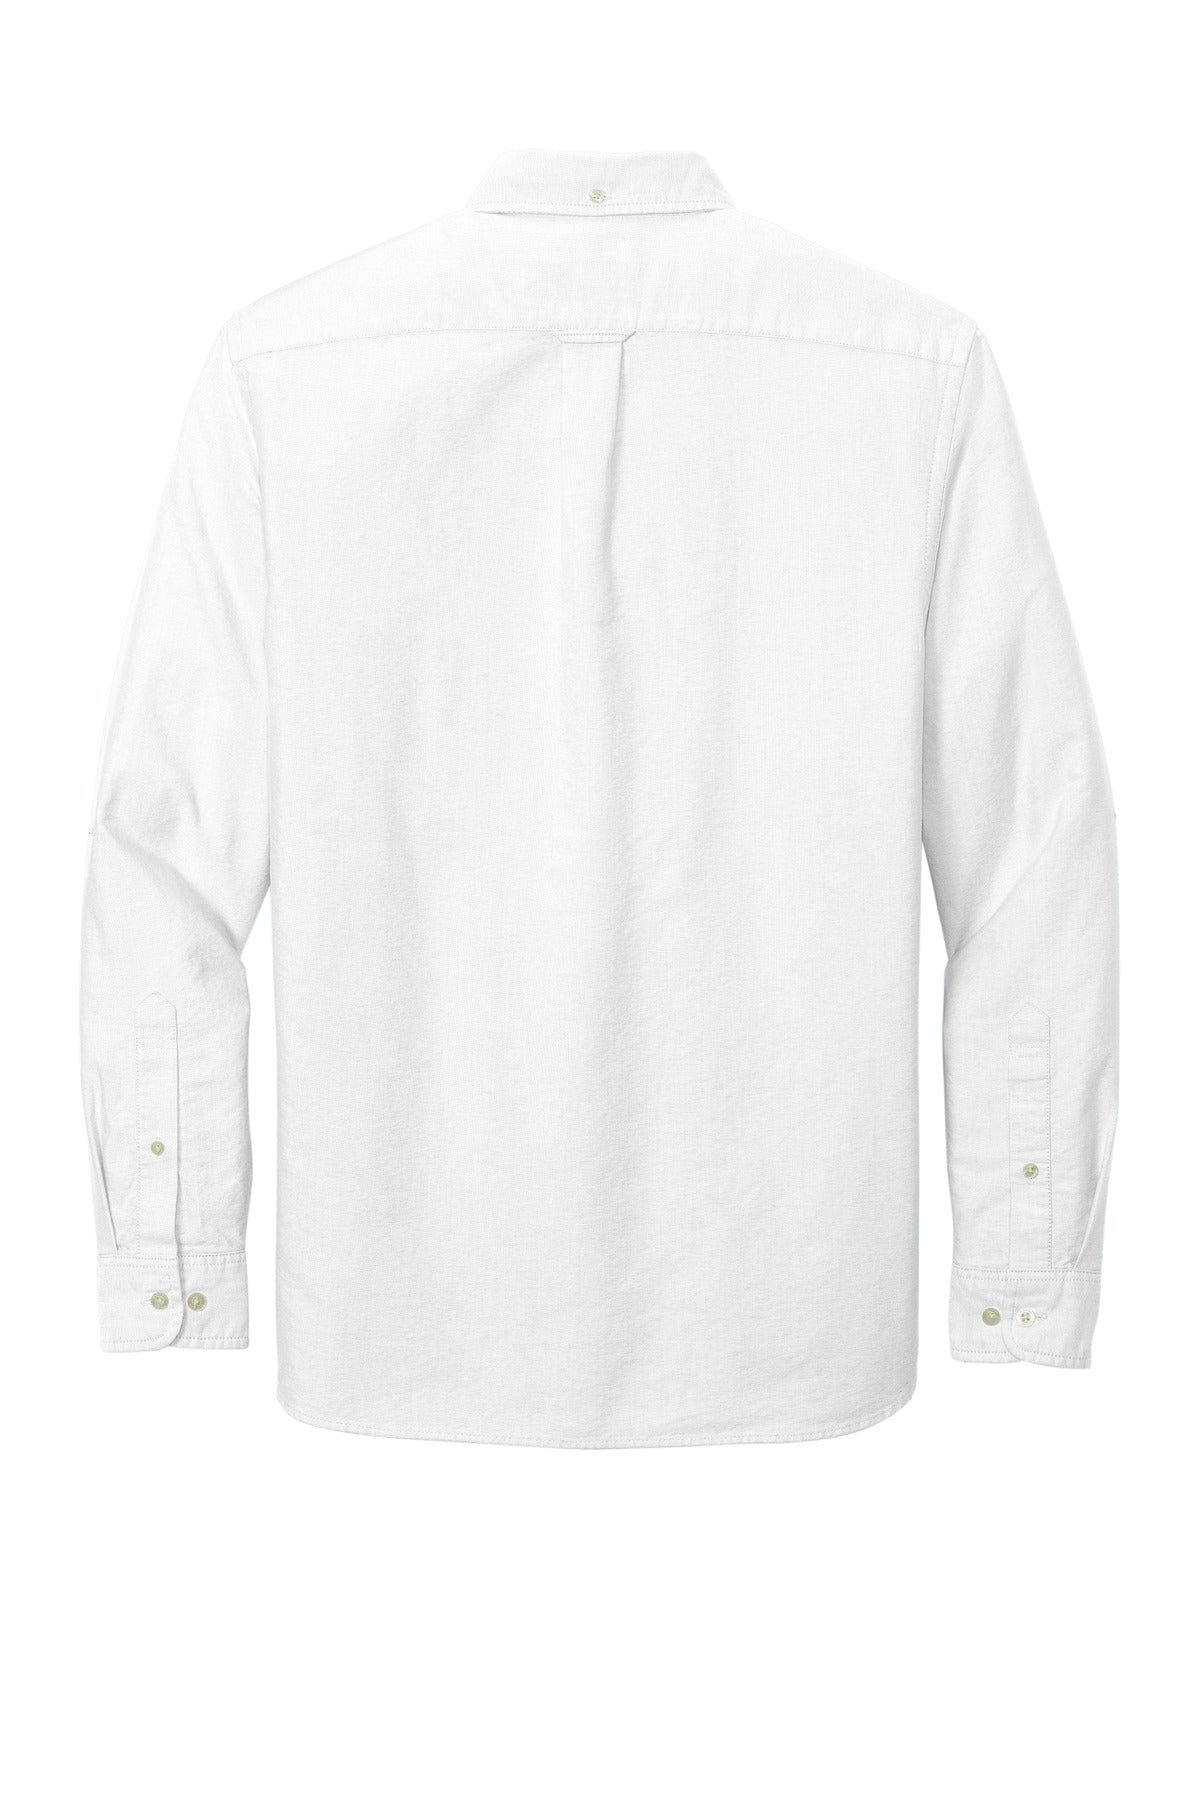 Brooks Brothers® Casual Oxford Cloth Shirt BB18004 - DFW Impression